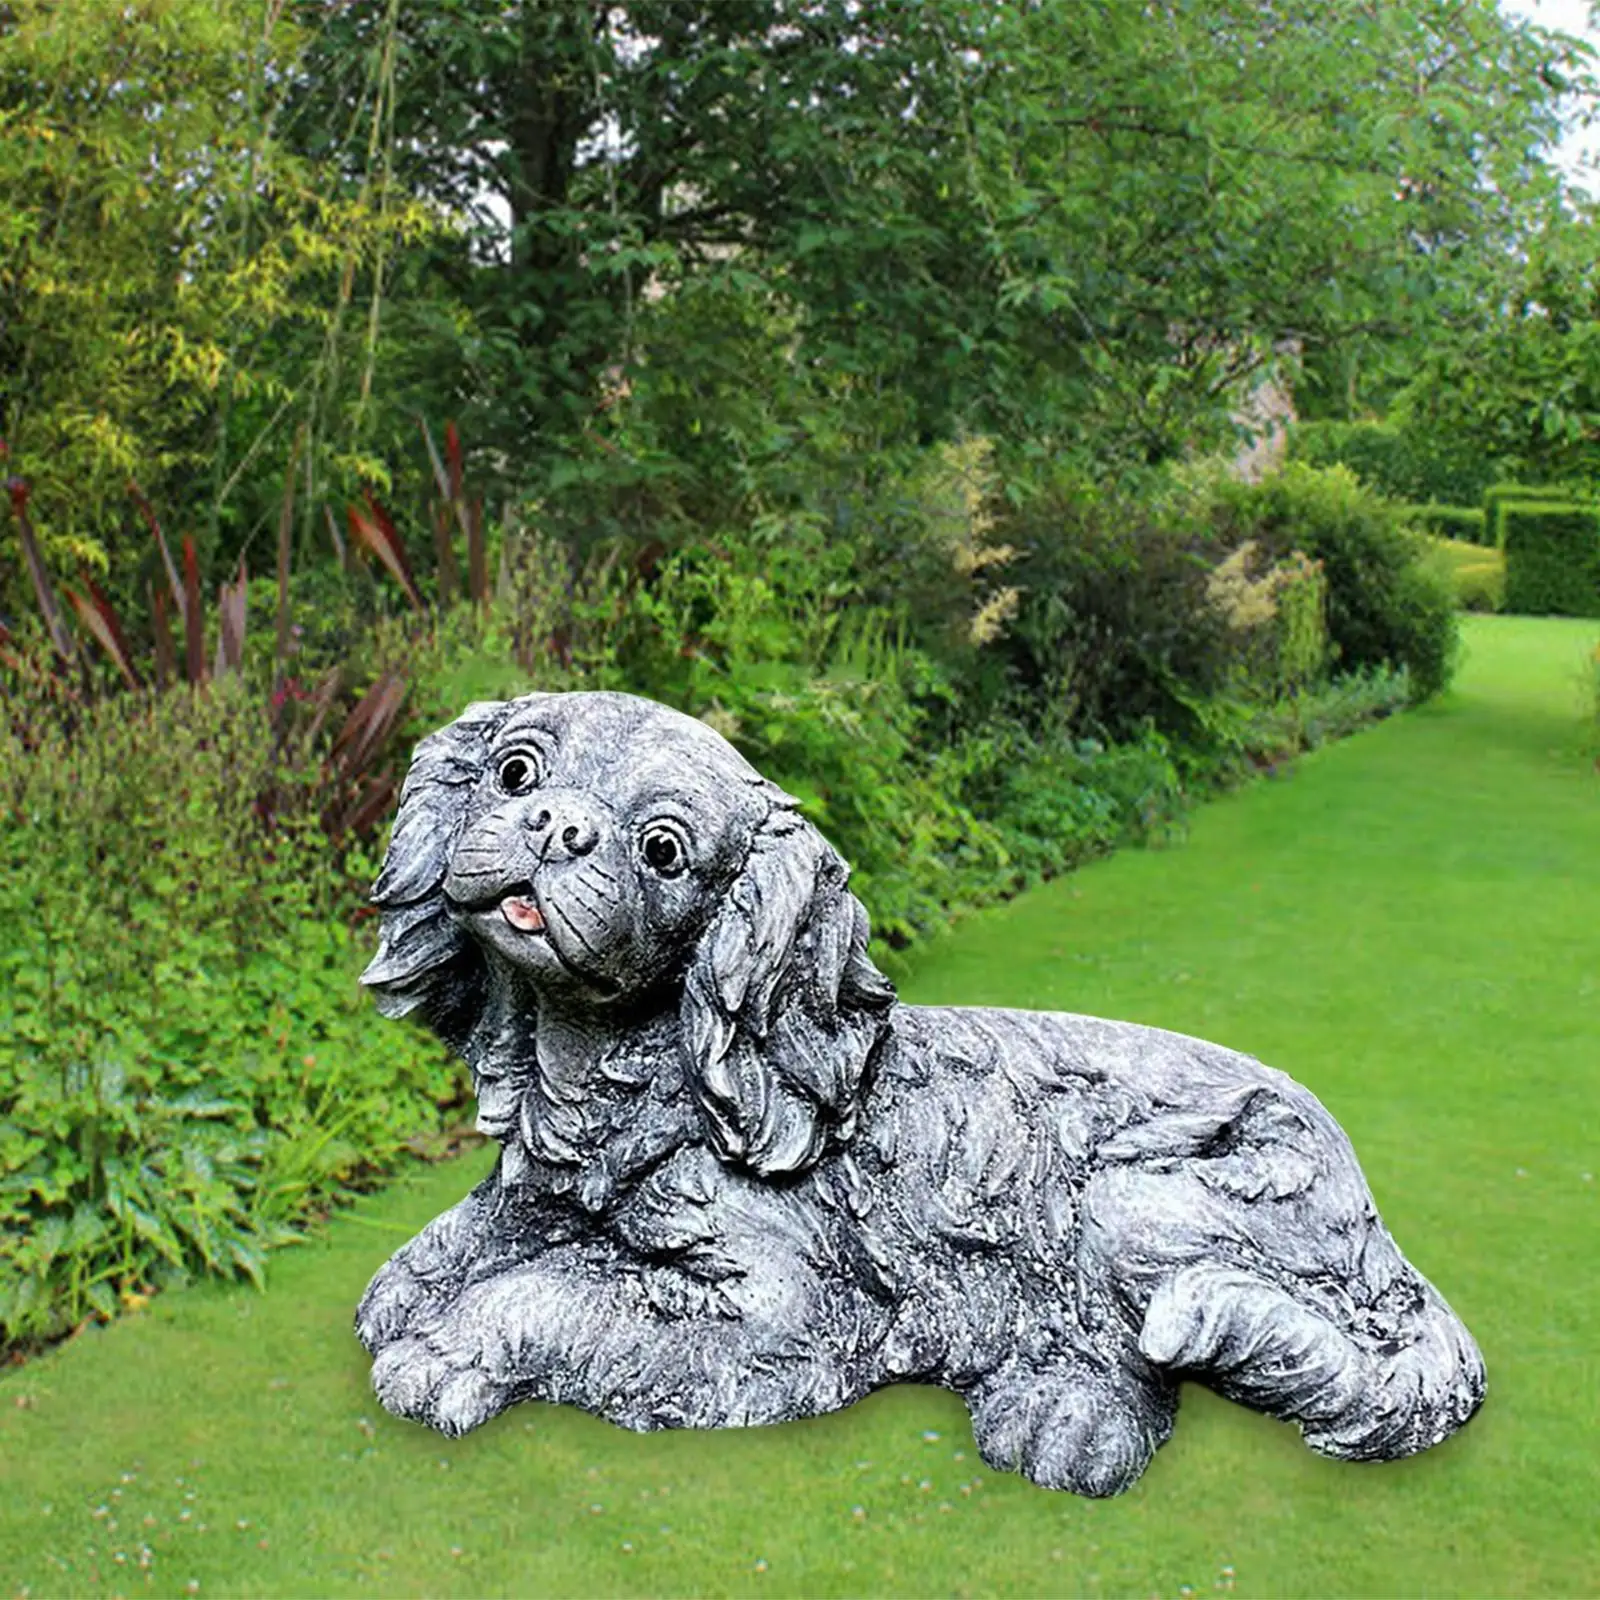 Puppy Dog, Figurine Sculpture Garden Statues Decorative for Patio Pet Memorial Gifts